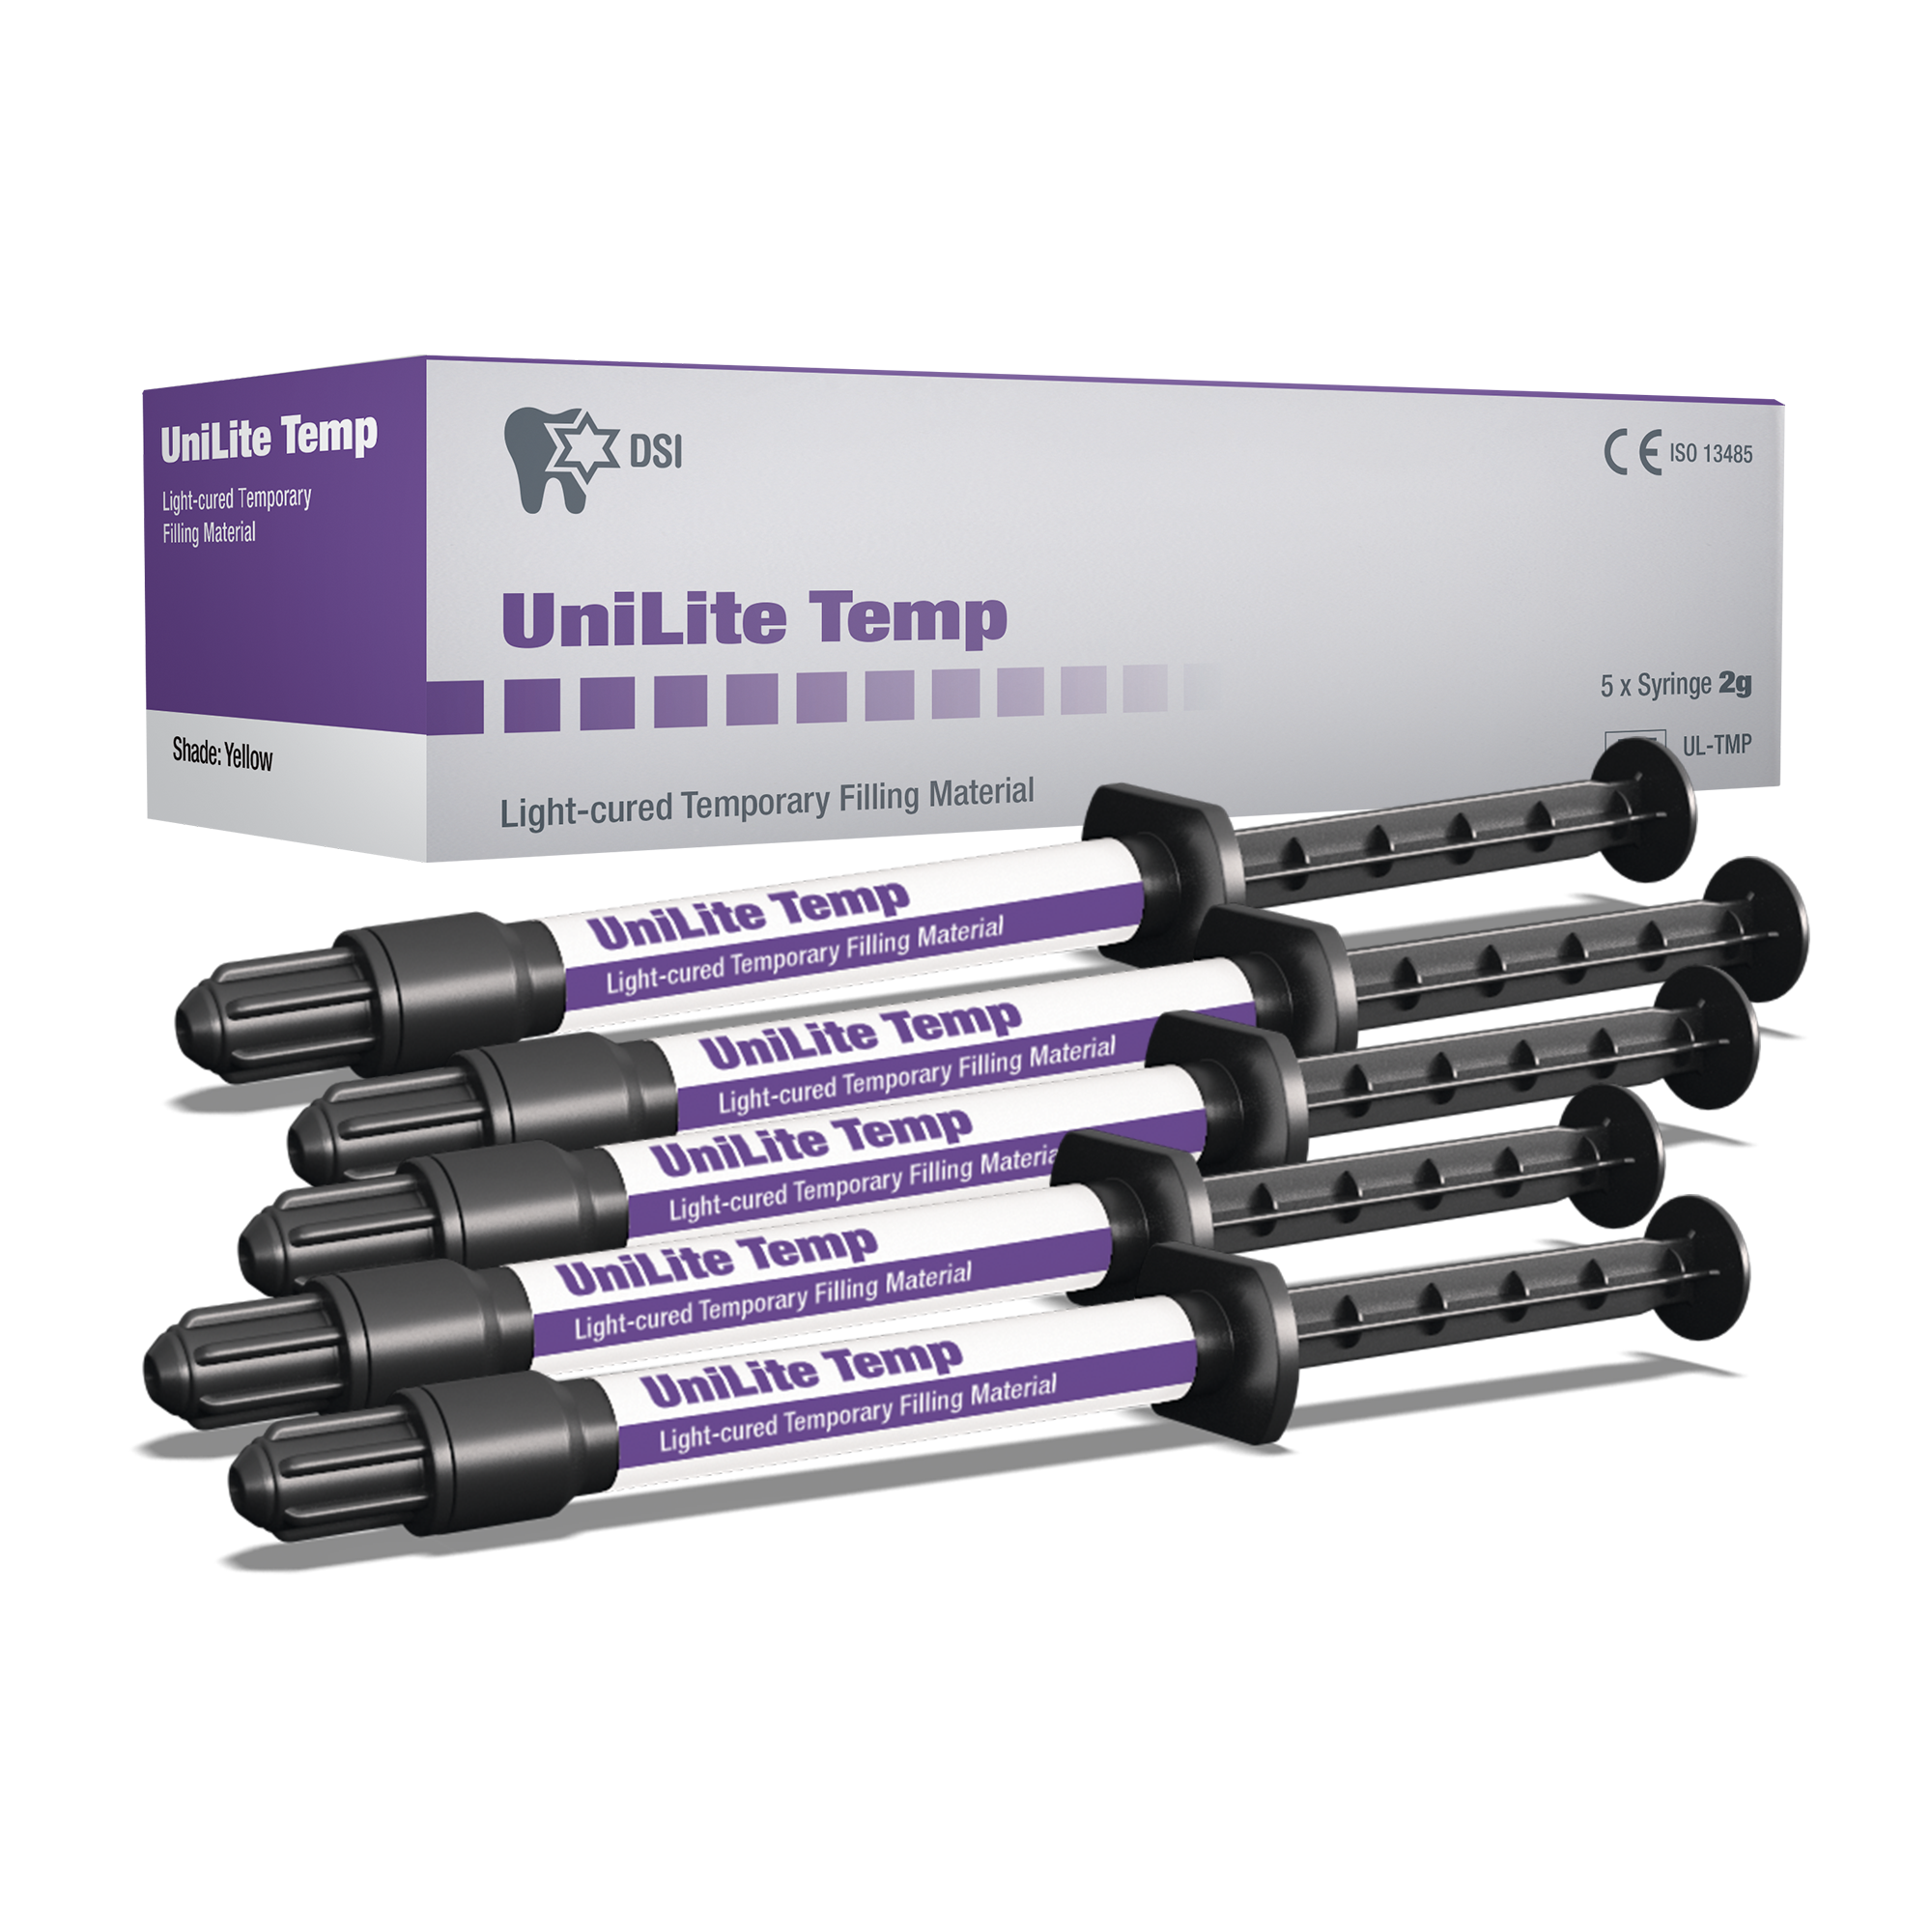 DSI UniLite Temp Light-cured Temporary Cavity Filler in Syringe 2g x 5pcs